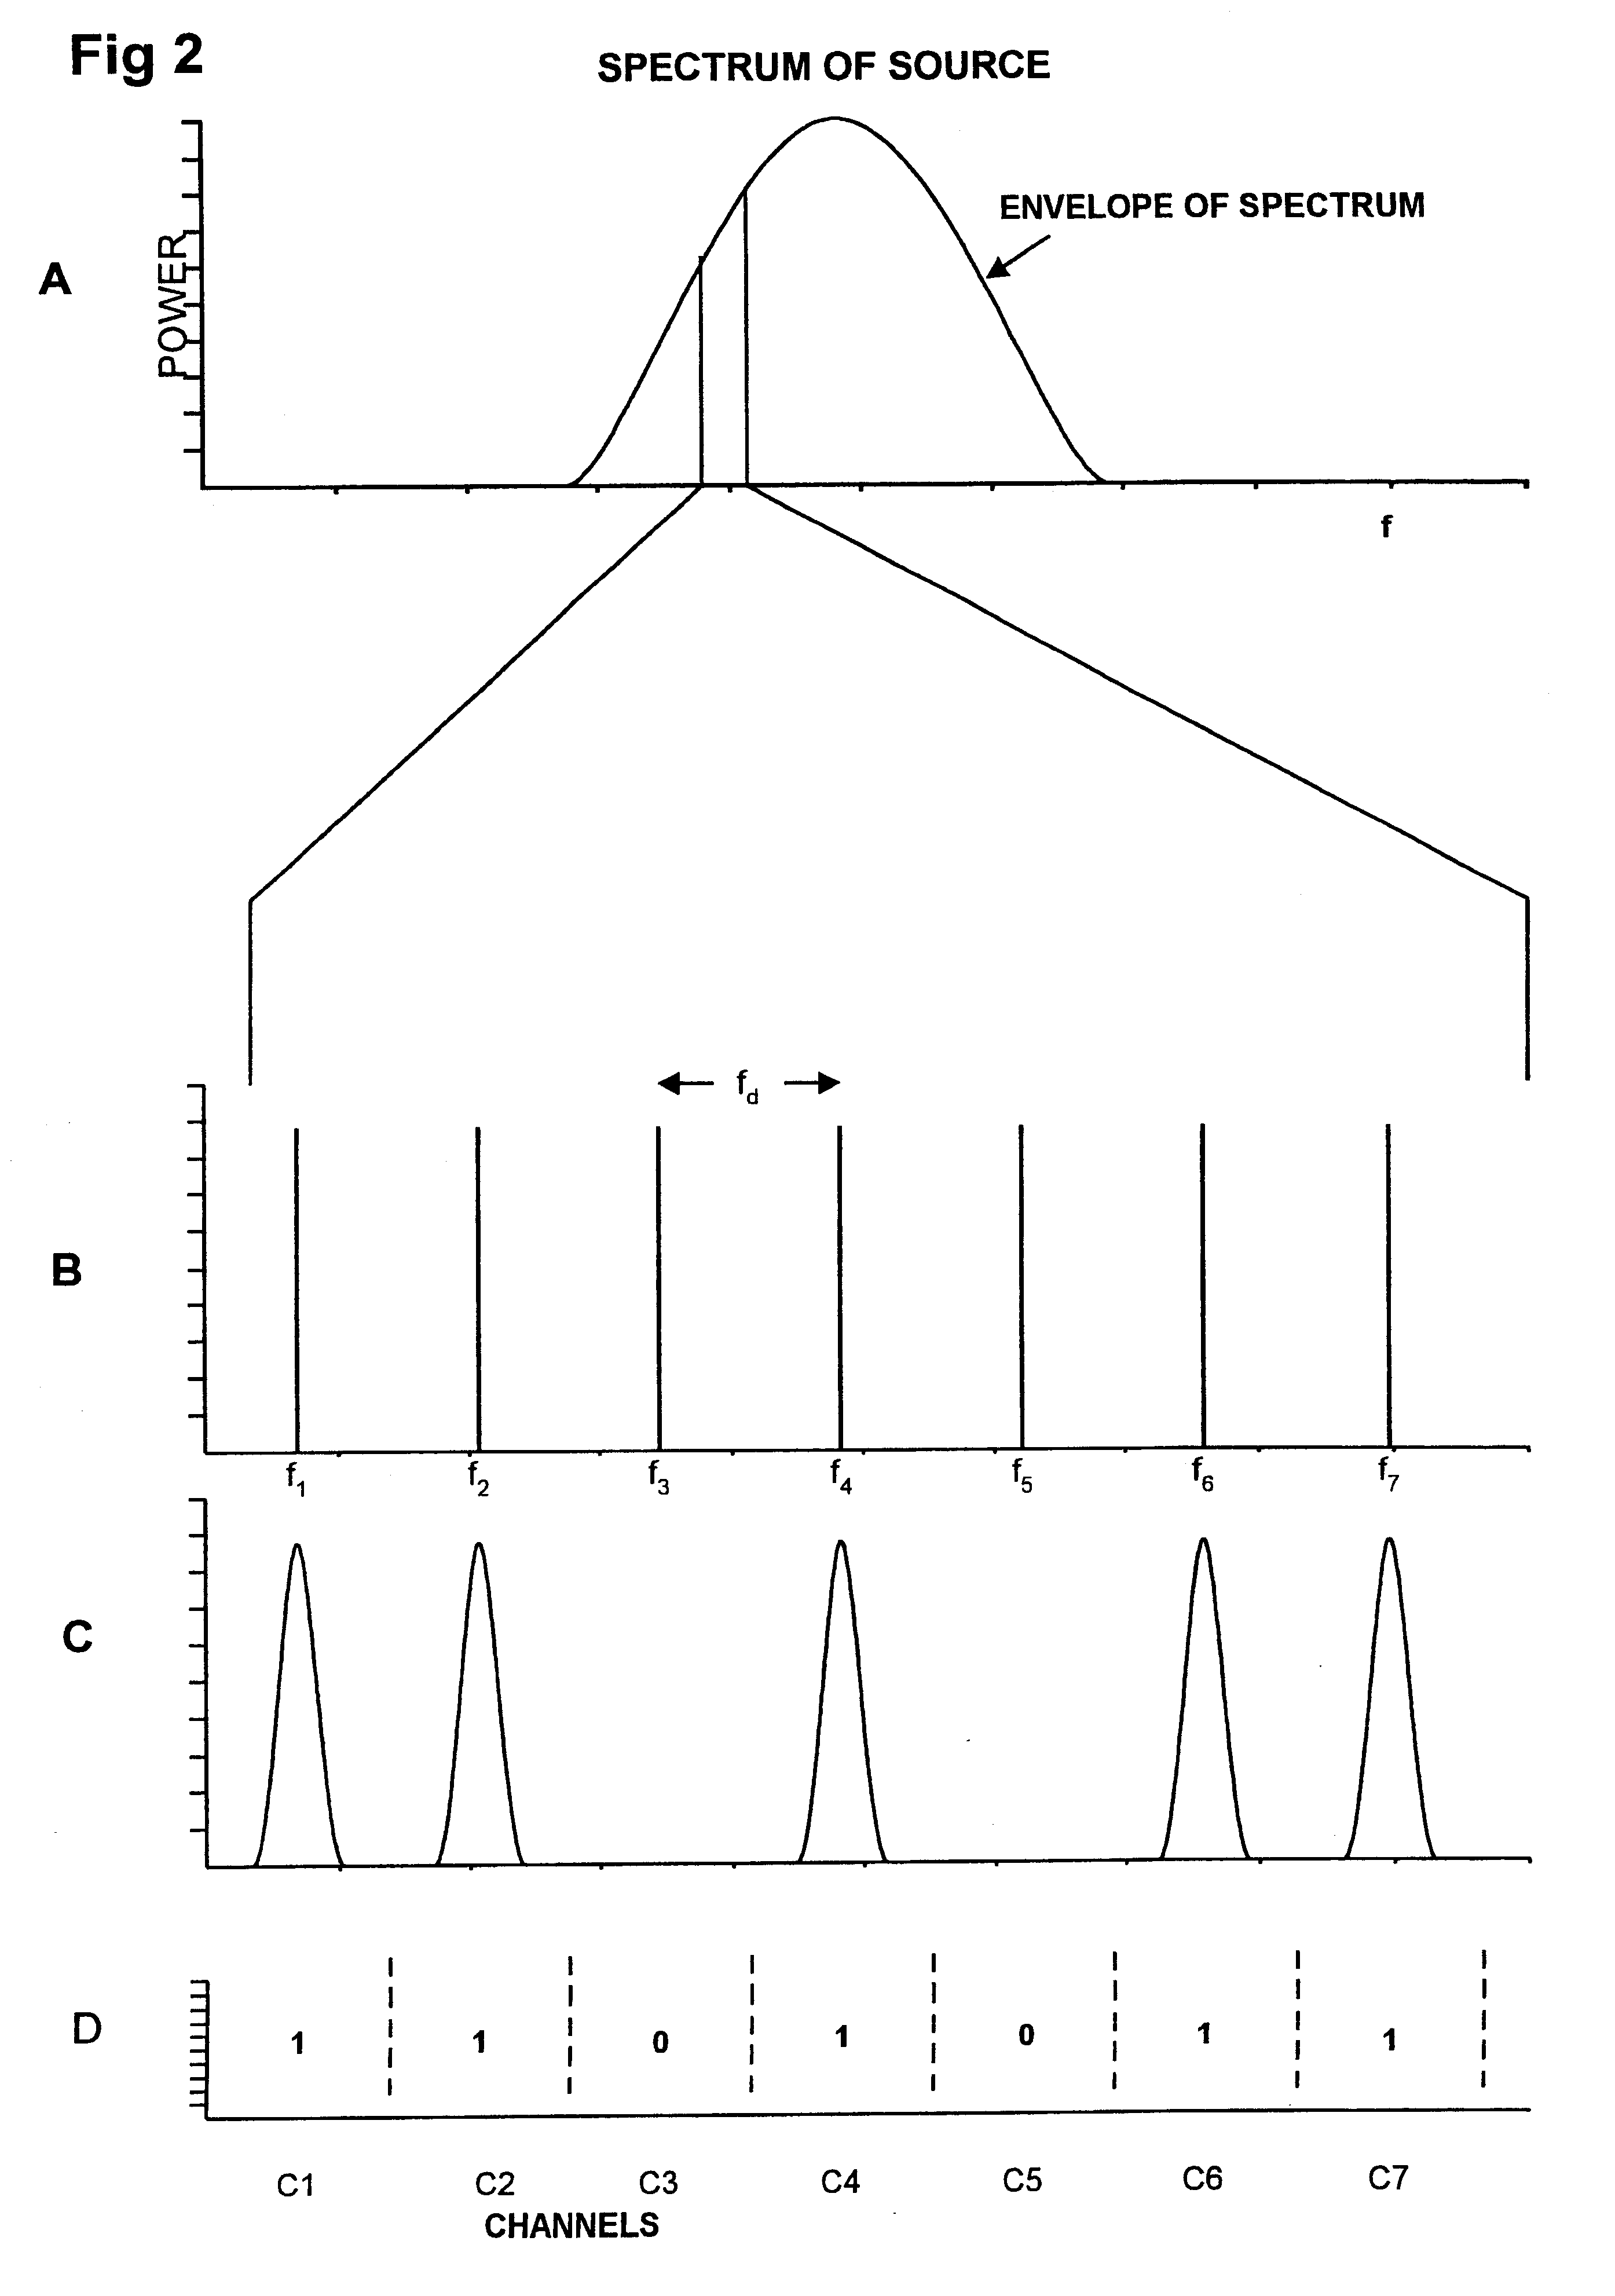 Multiplexed transmission of optical signals